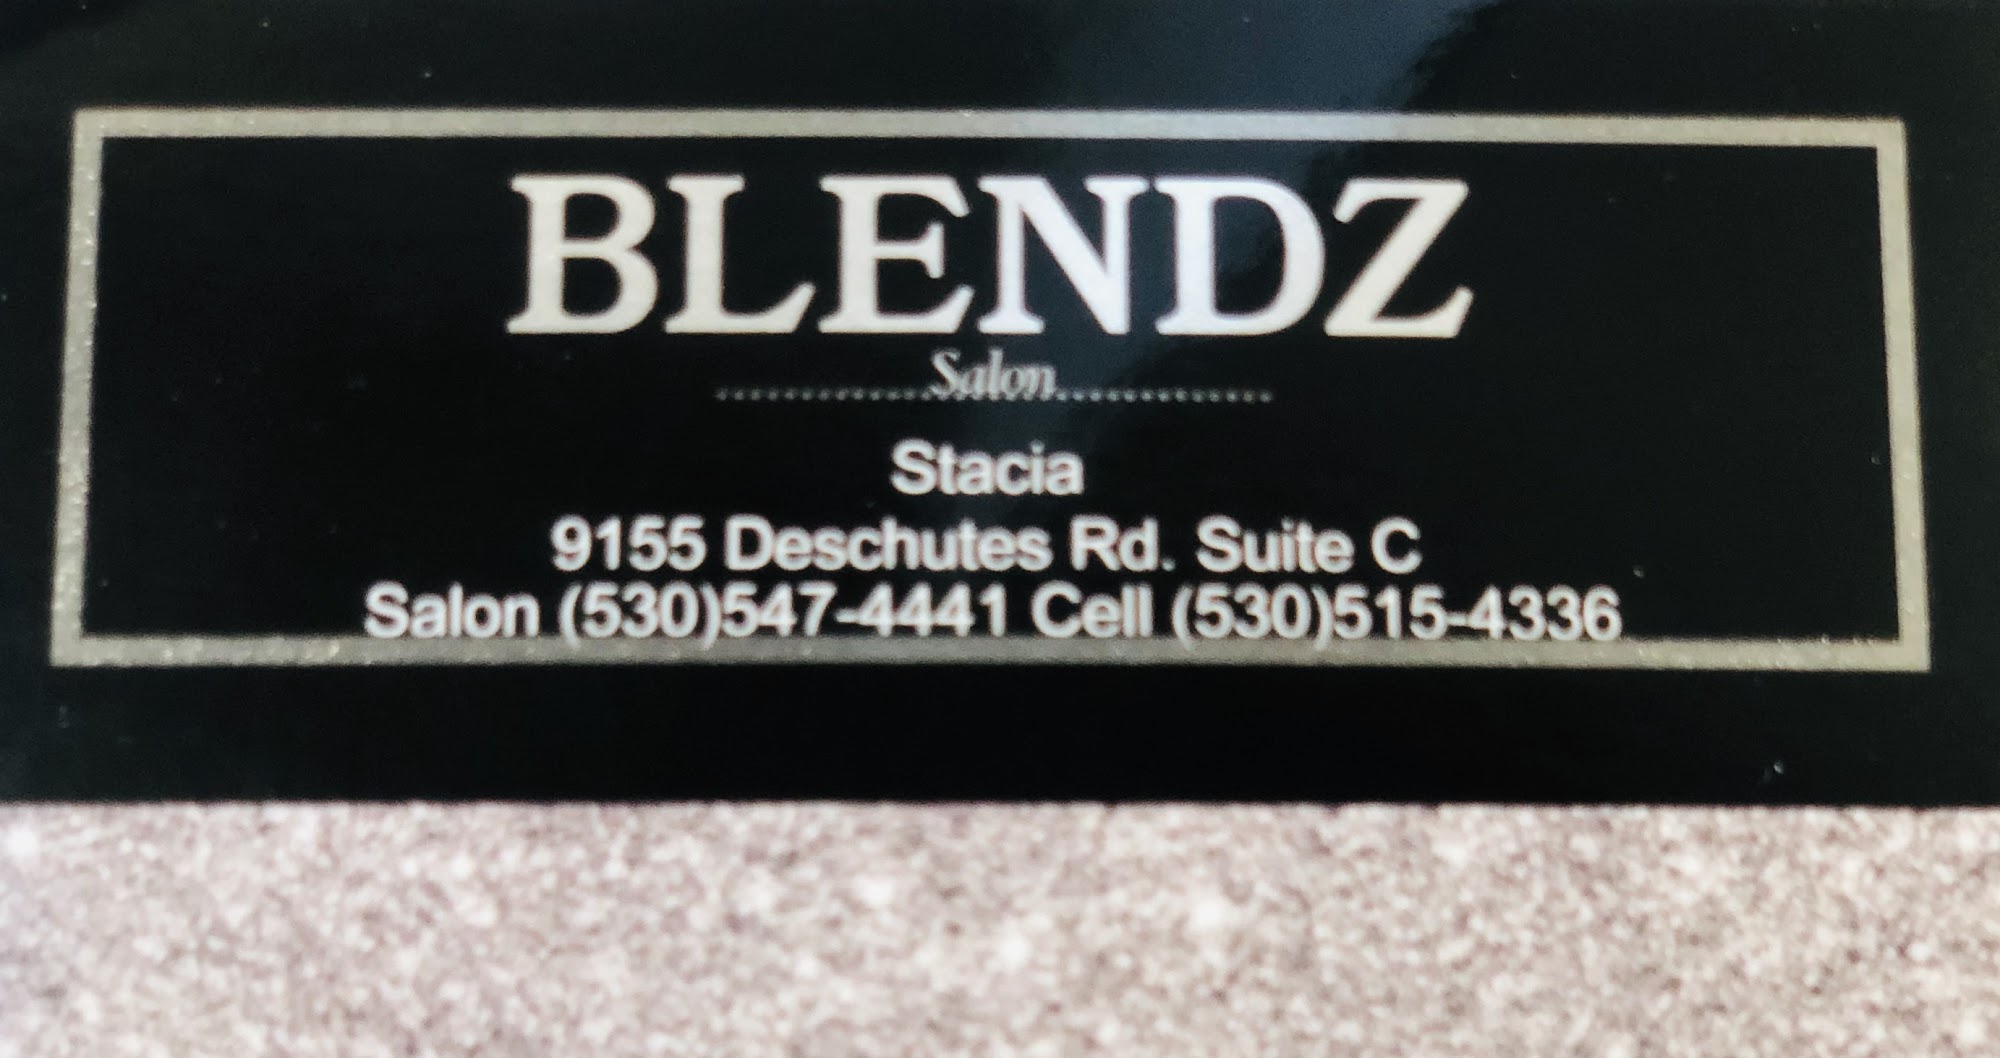 Blendz Barbershop and Salon